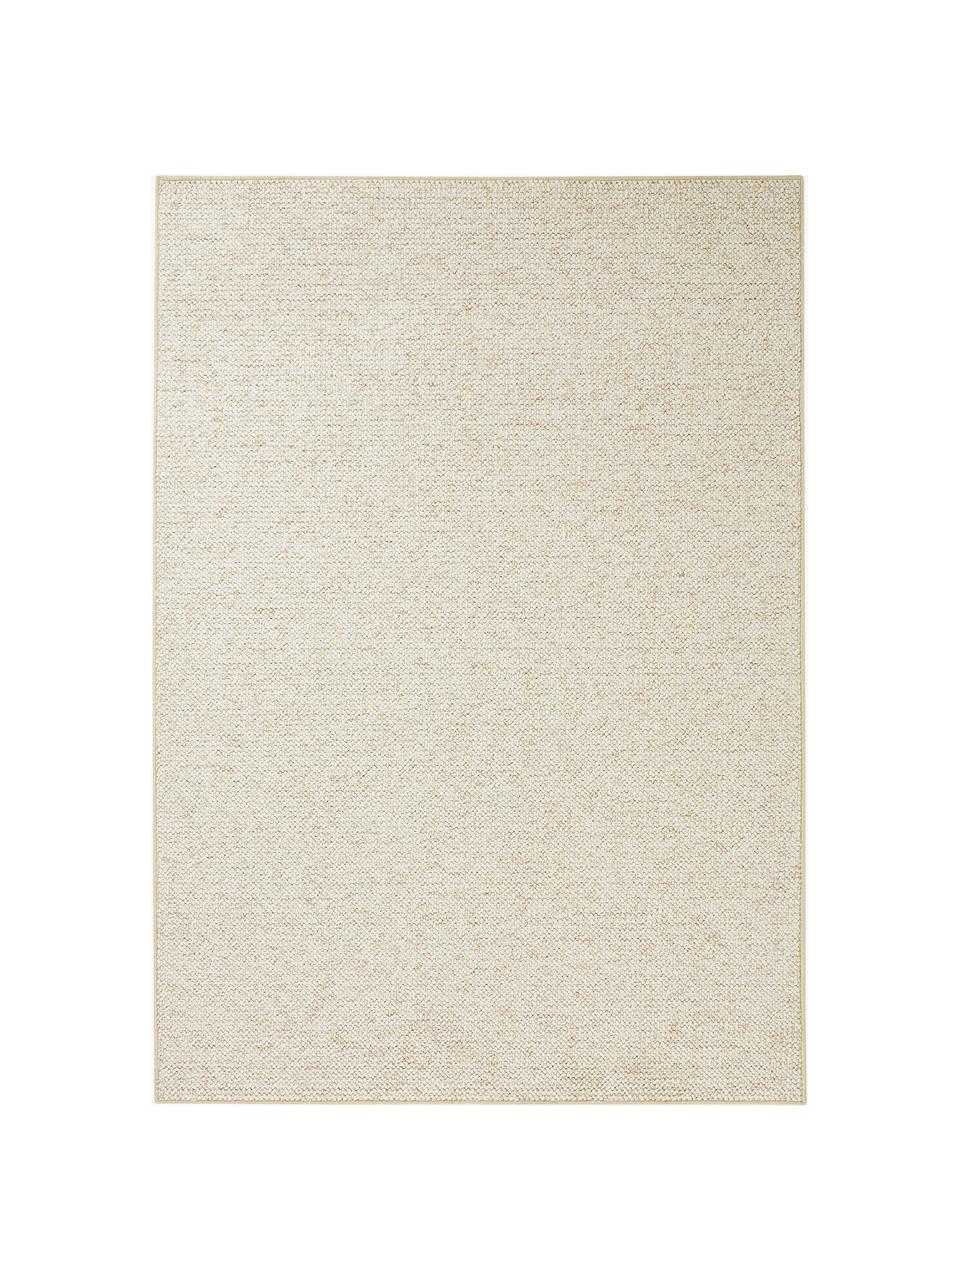 Teppich Lyon mit Schlingen-Flor, Flor: 100 % Polypropylen, Cremeweiss, B 140 x L 200 cm (Grösse S)